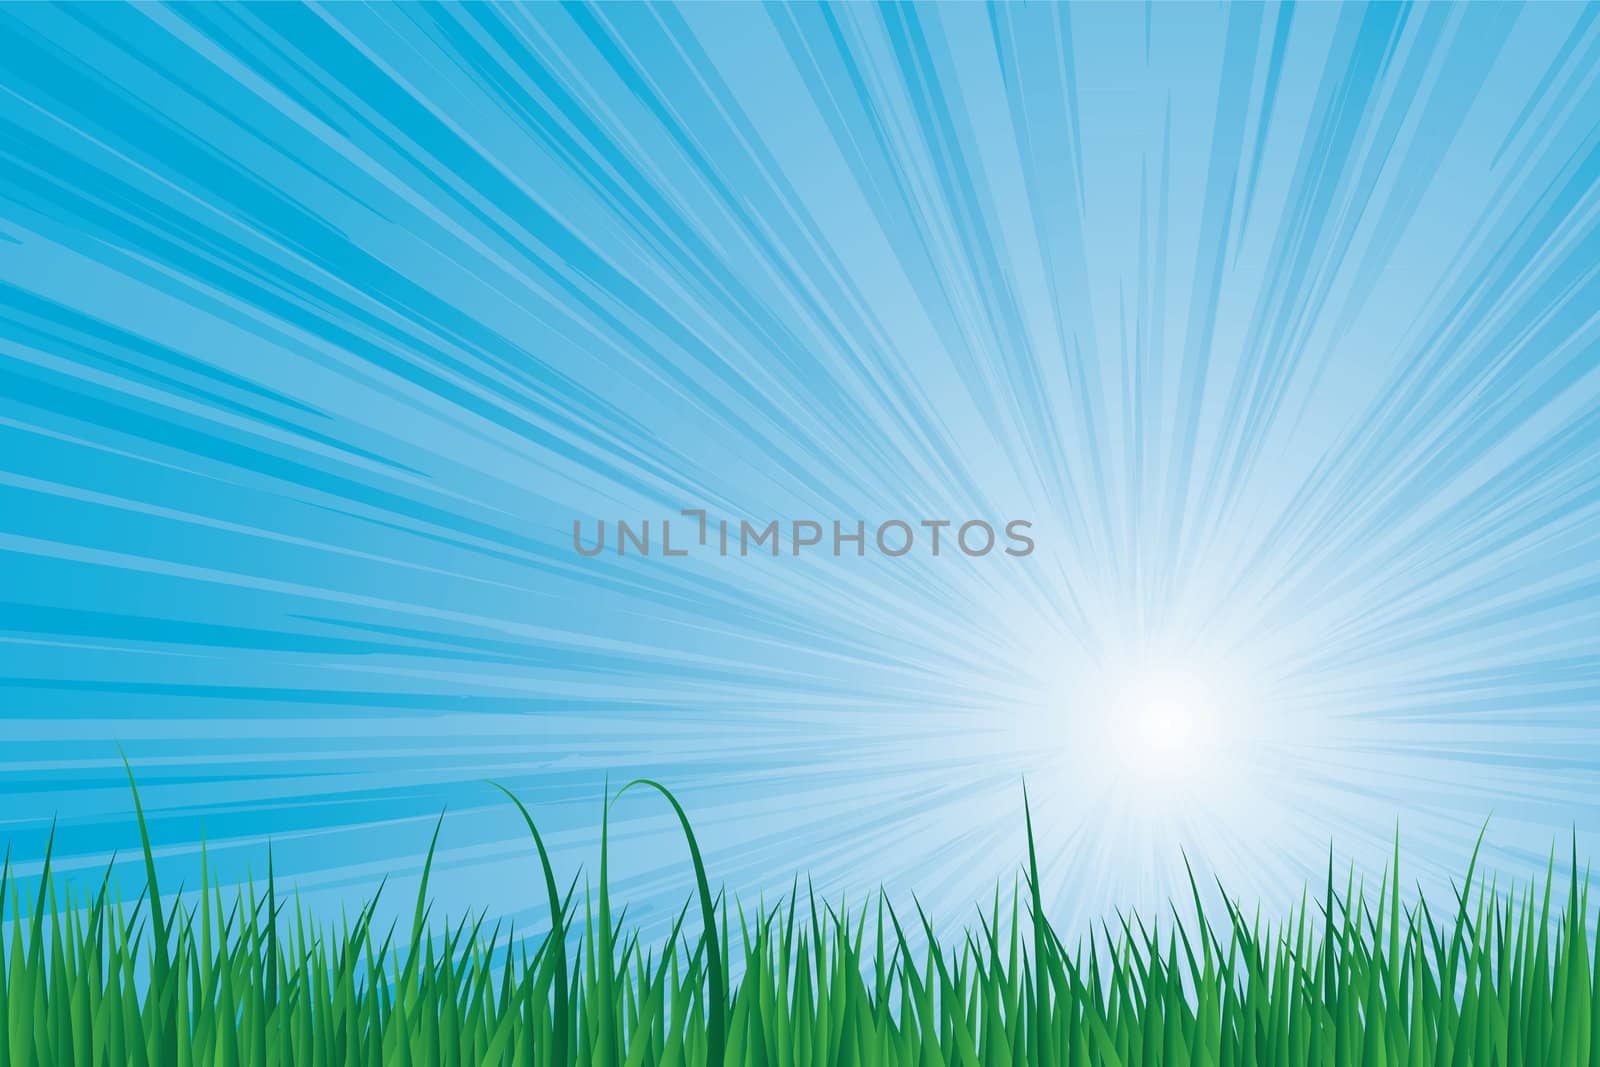 Sunburst blue sky green grass vector image.